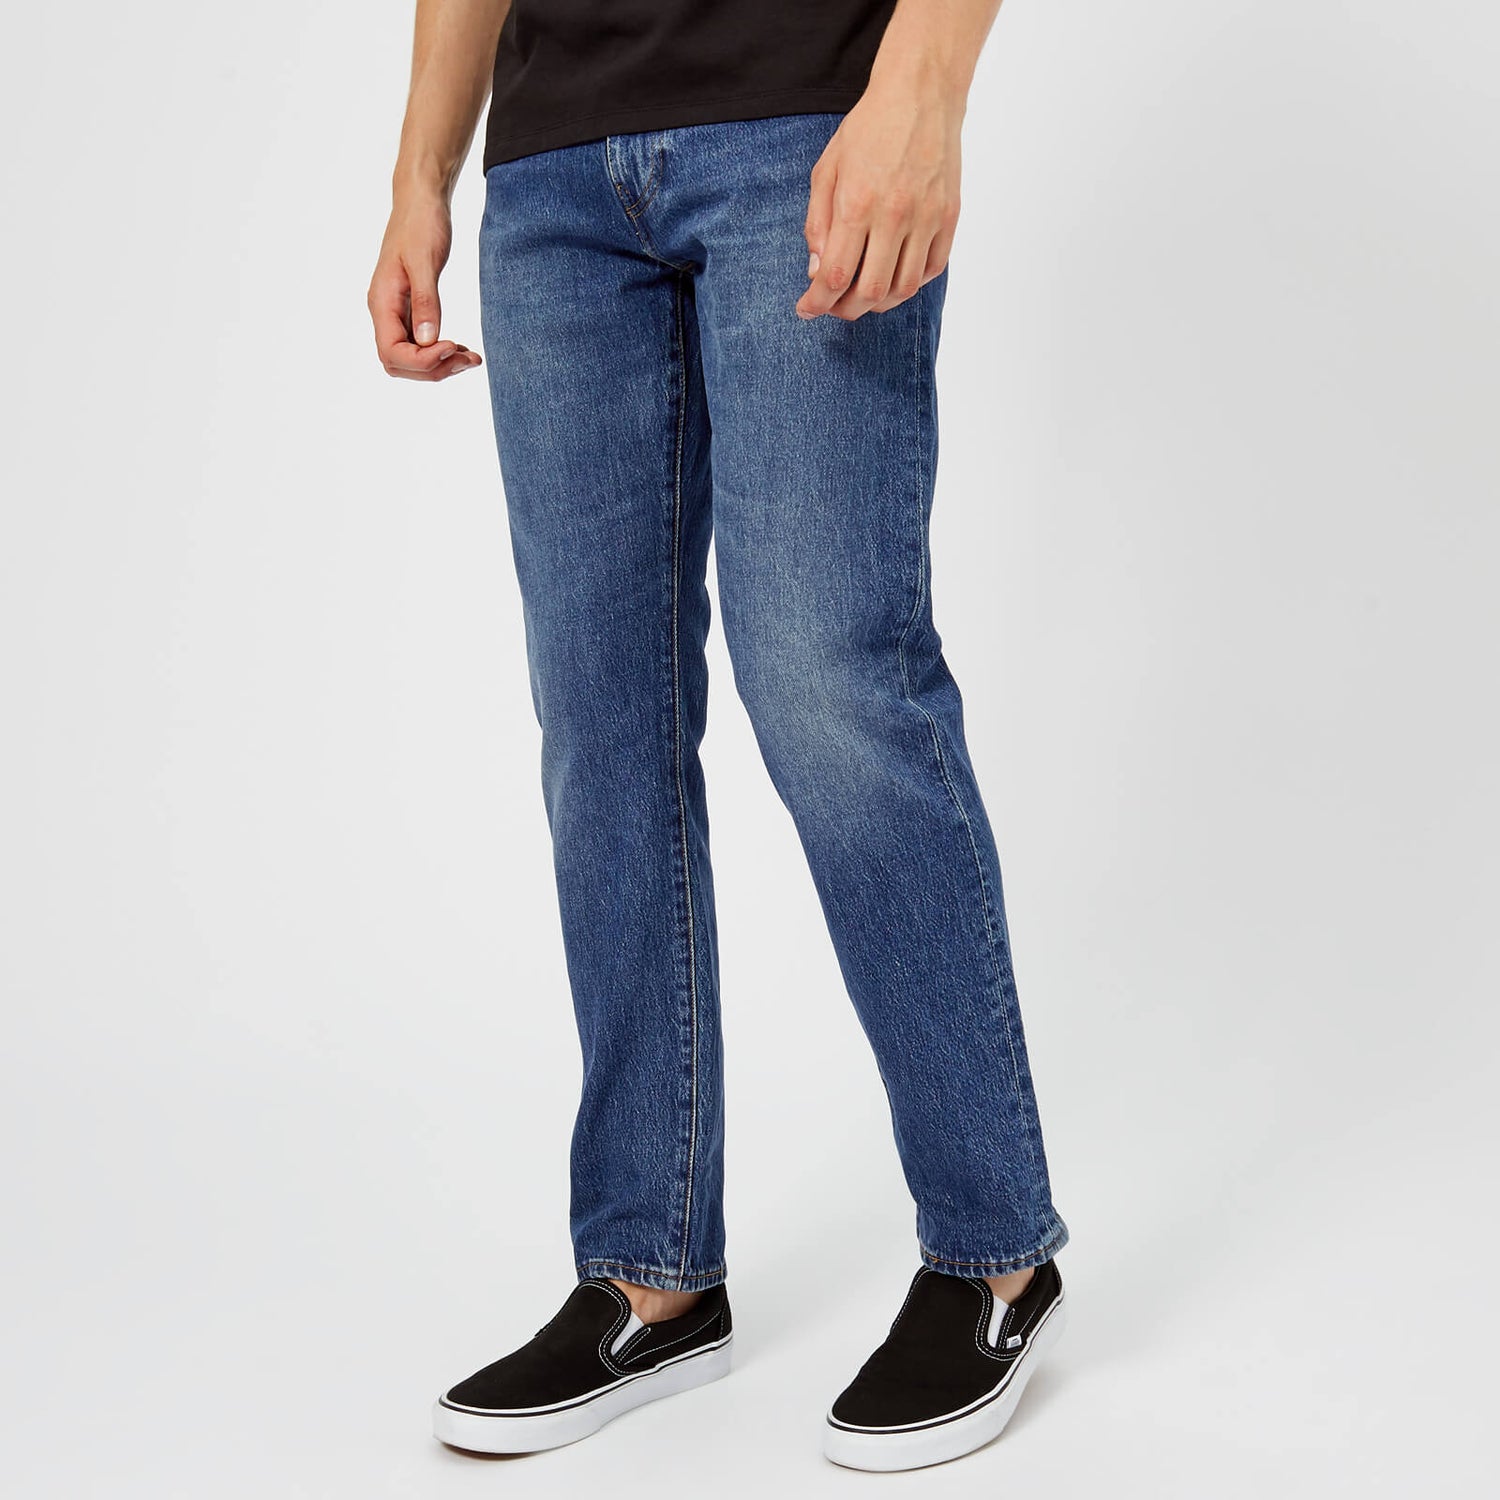 Levi's Men's 502 Regular Taper Jeans - Sixteen | TheHut.com